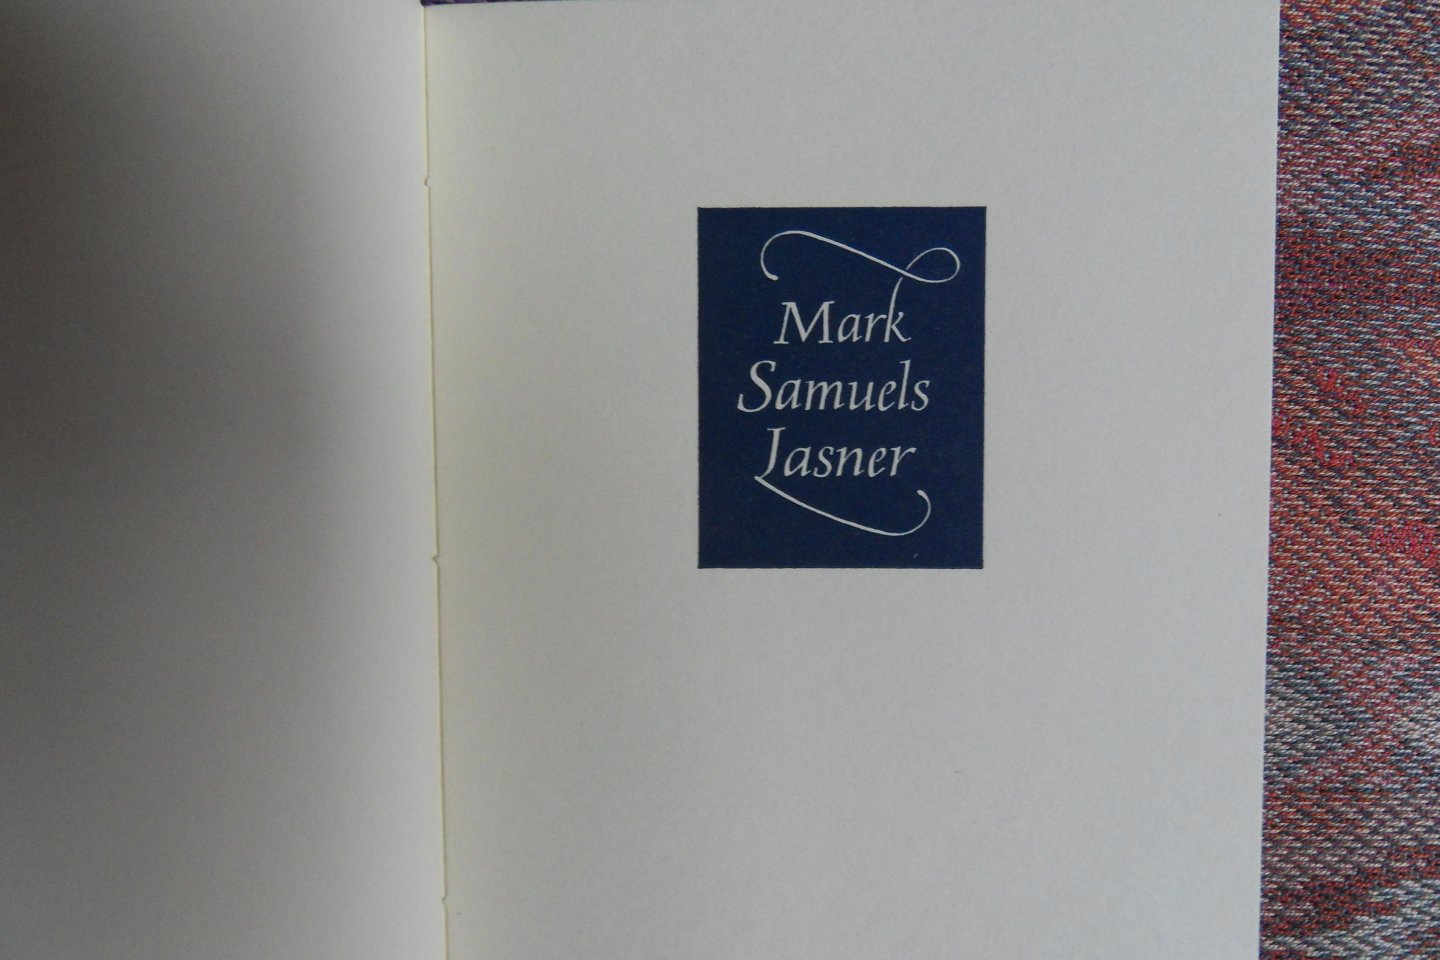 Carter, Sebastian. - Bookplates, Cartouches and Designs. [ Beperkte oplage van 150 ex. ]. - The Henry Davis Gift 1977.